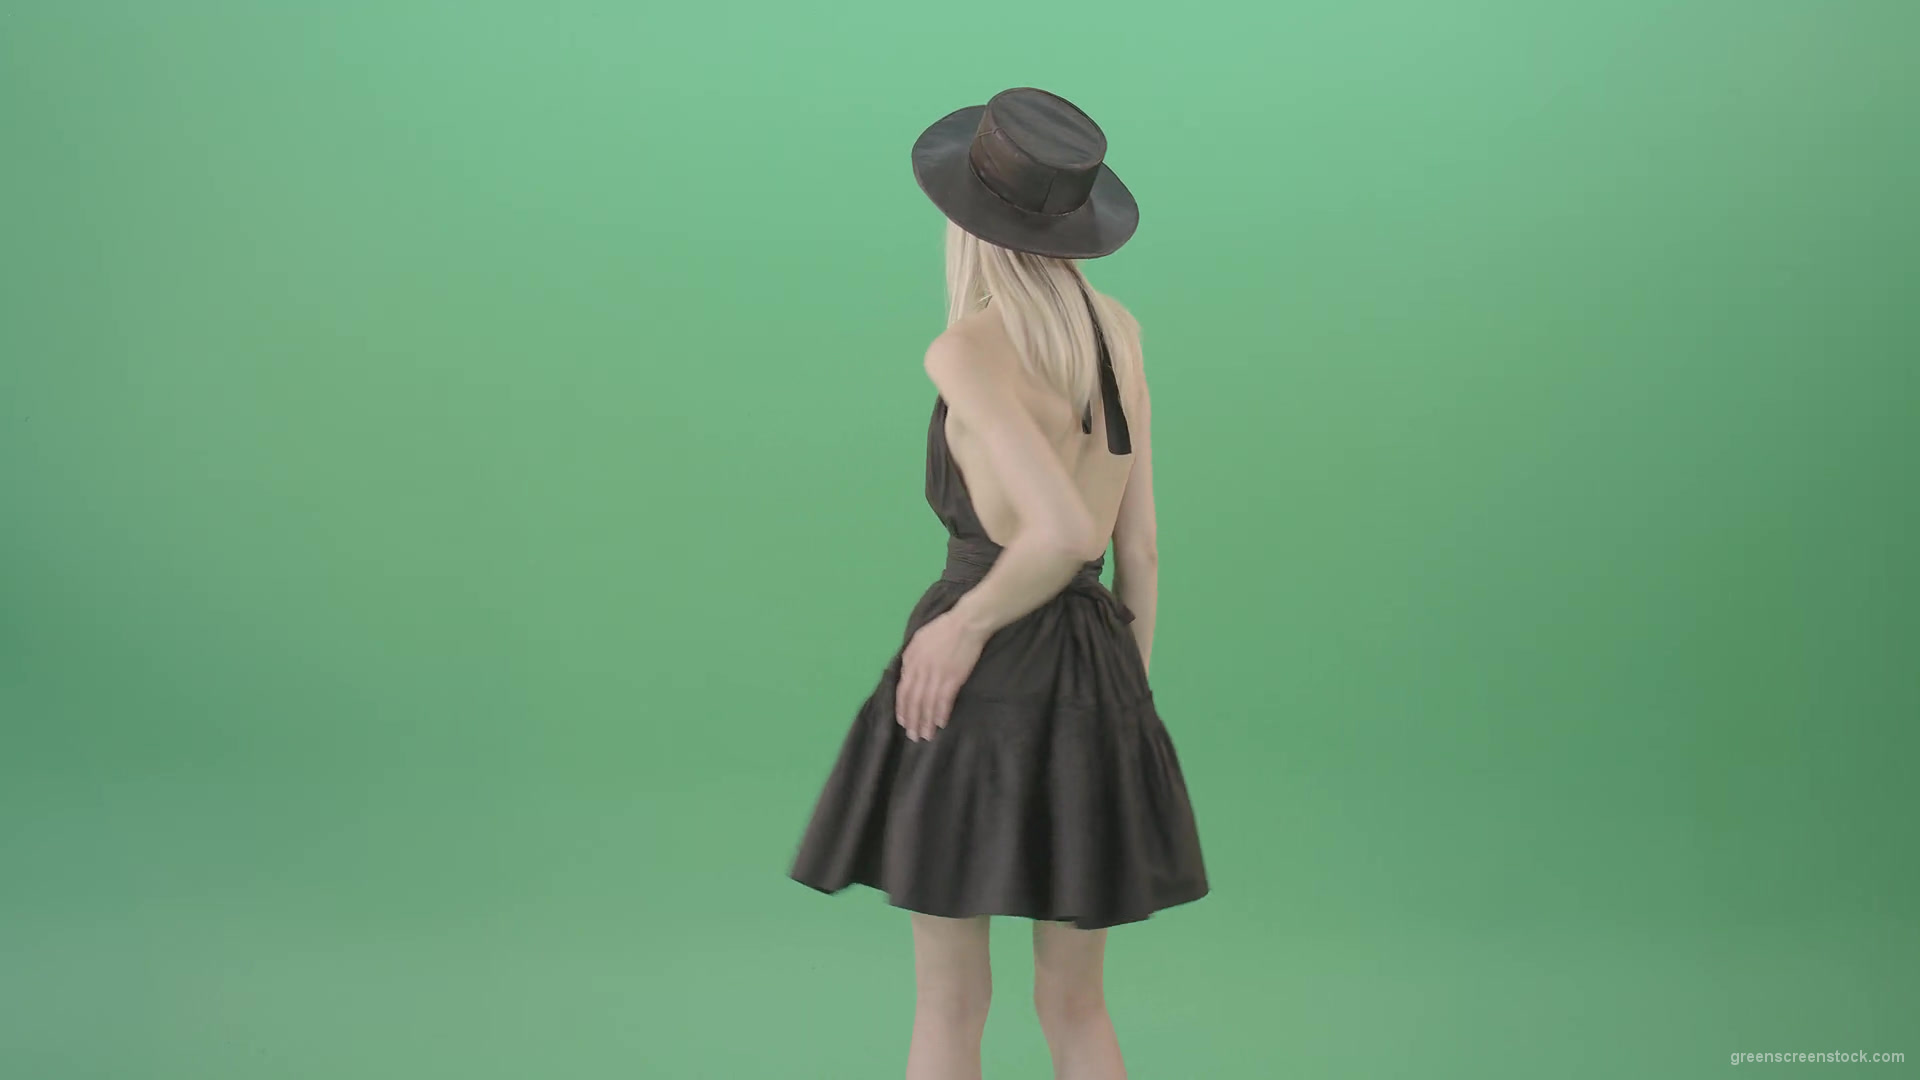 Blonde-girl-in-black-hat-with-open-back-posing-in-dark-dress-over-green-screen-4K-Video-Footage-1920_002 Green Screen Stock